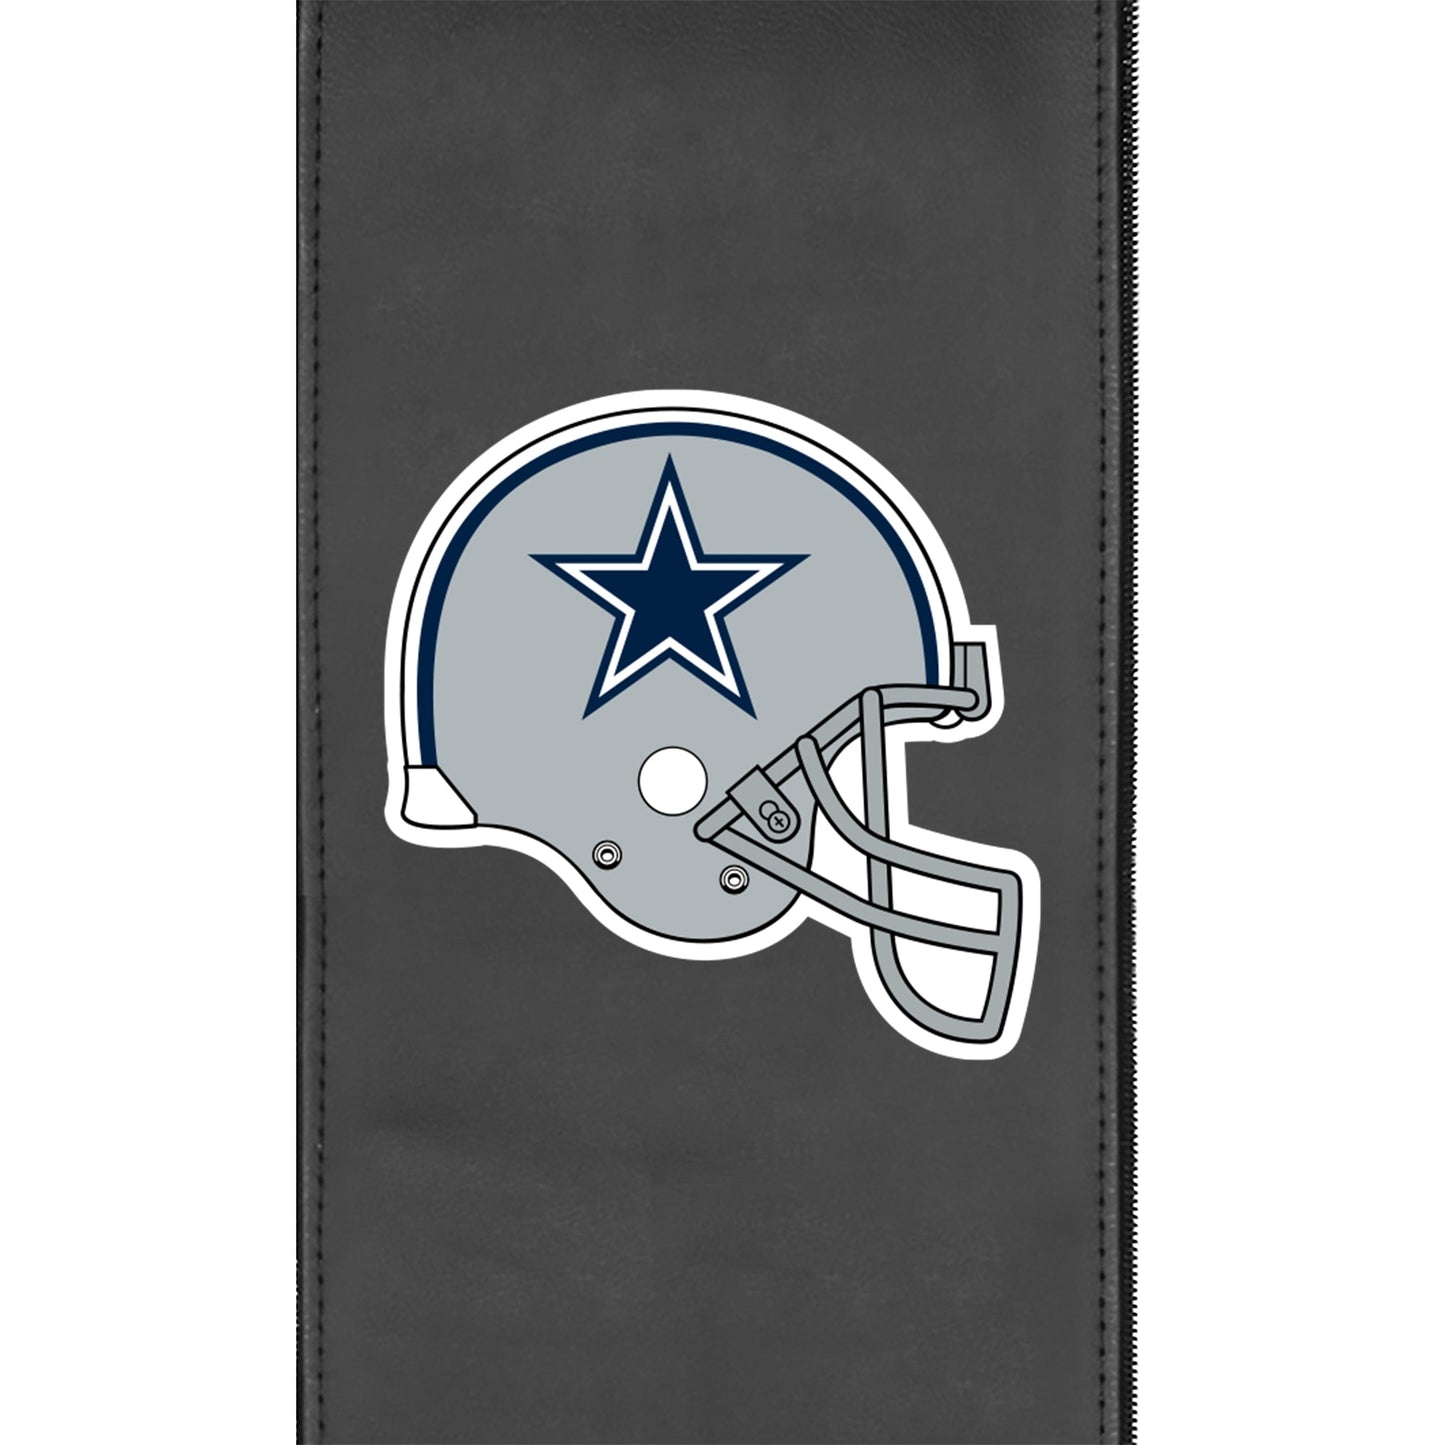 Freedom Rocker Recliner with Dallas Cowboys Helmet Logo